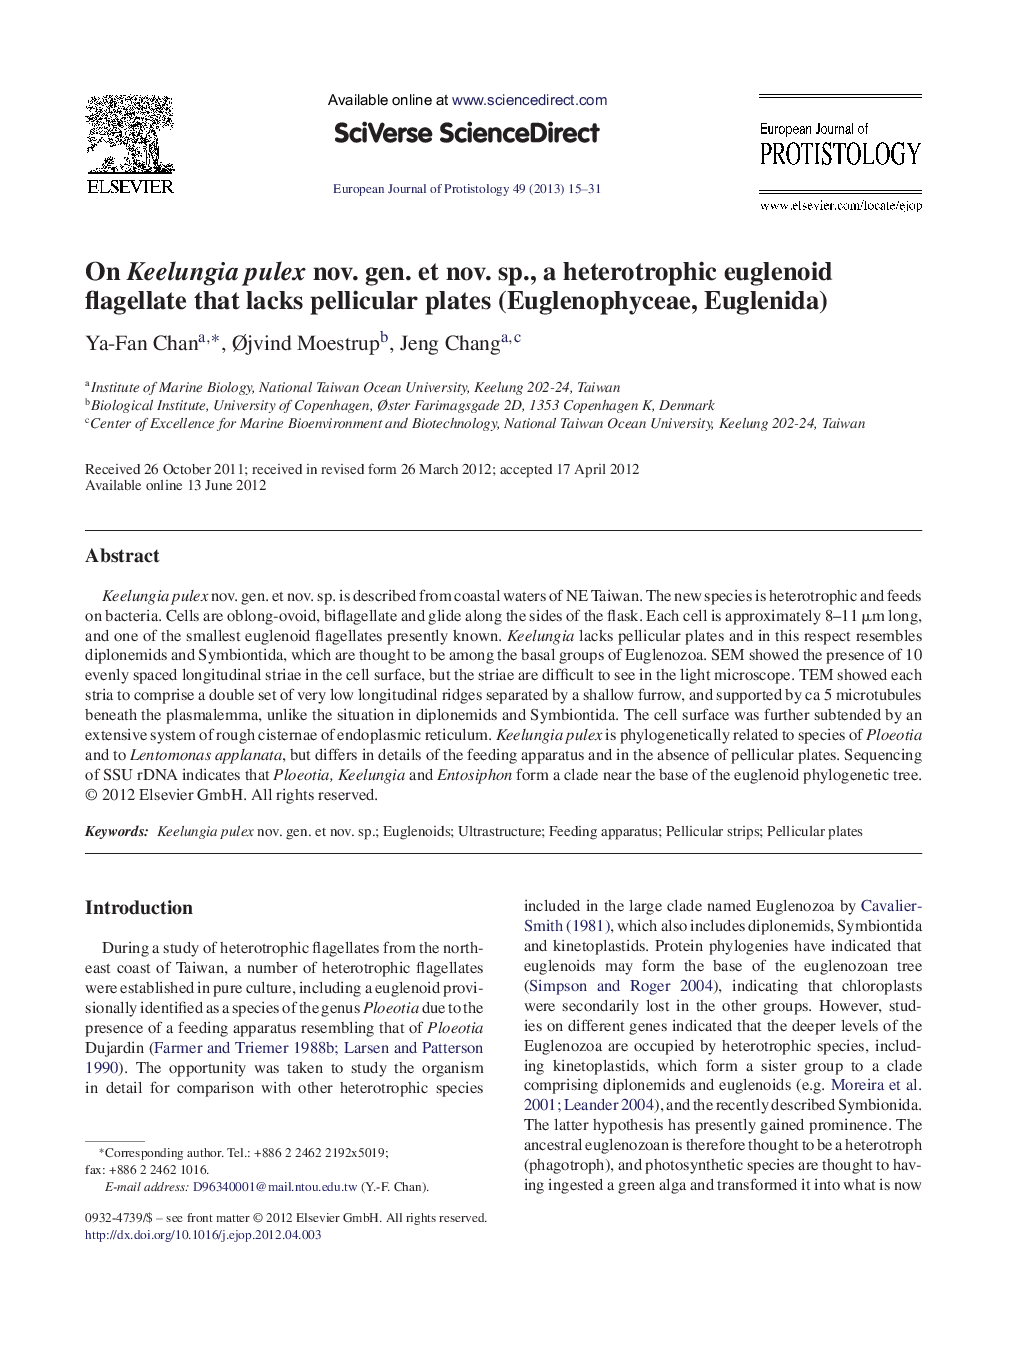 On Keelungia pulex nov. gen. et nov. sp., a heterotrophic euglenoid flagellate that lacks pellicular plates (Euglenophyceae, Euglenida)